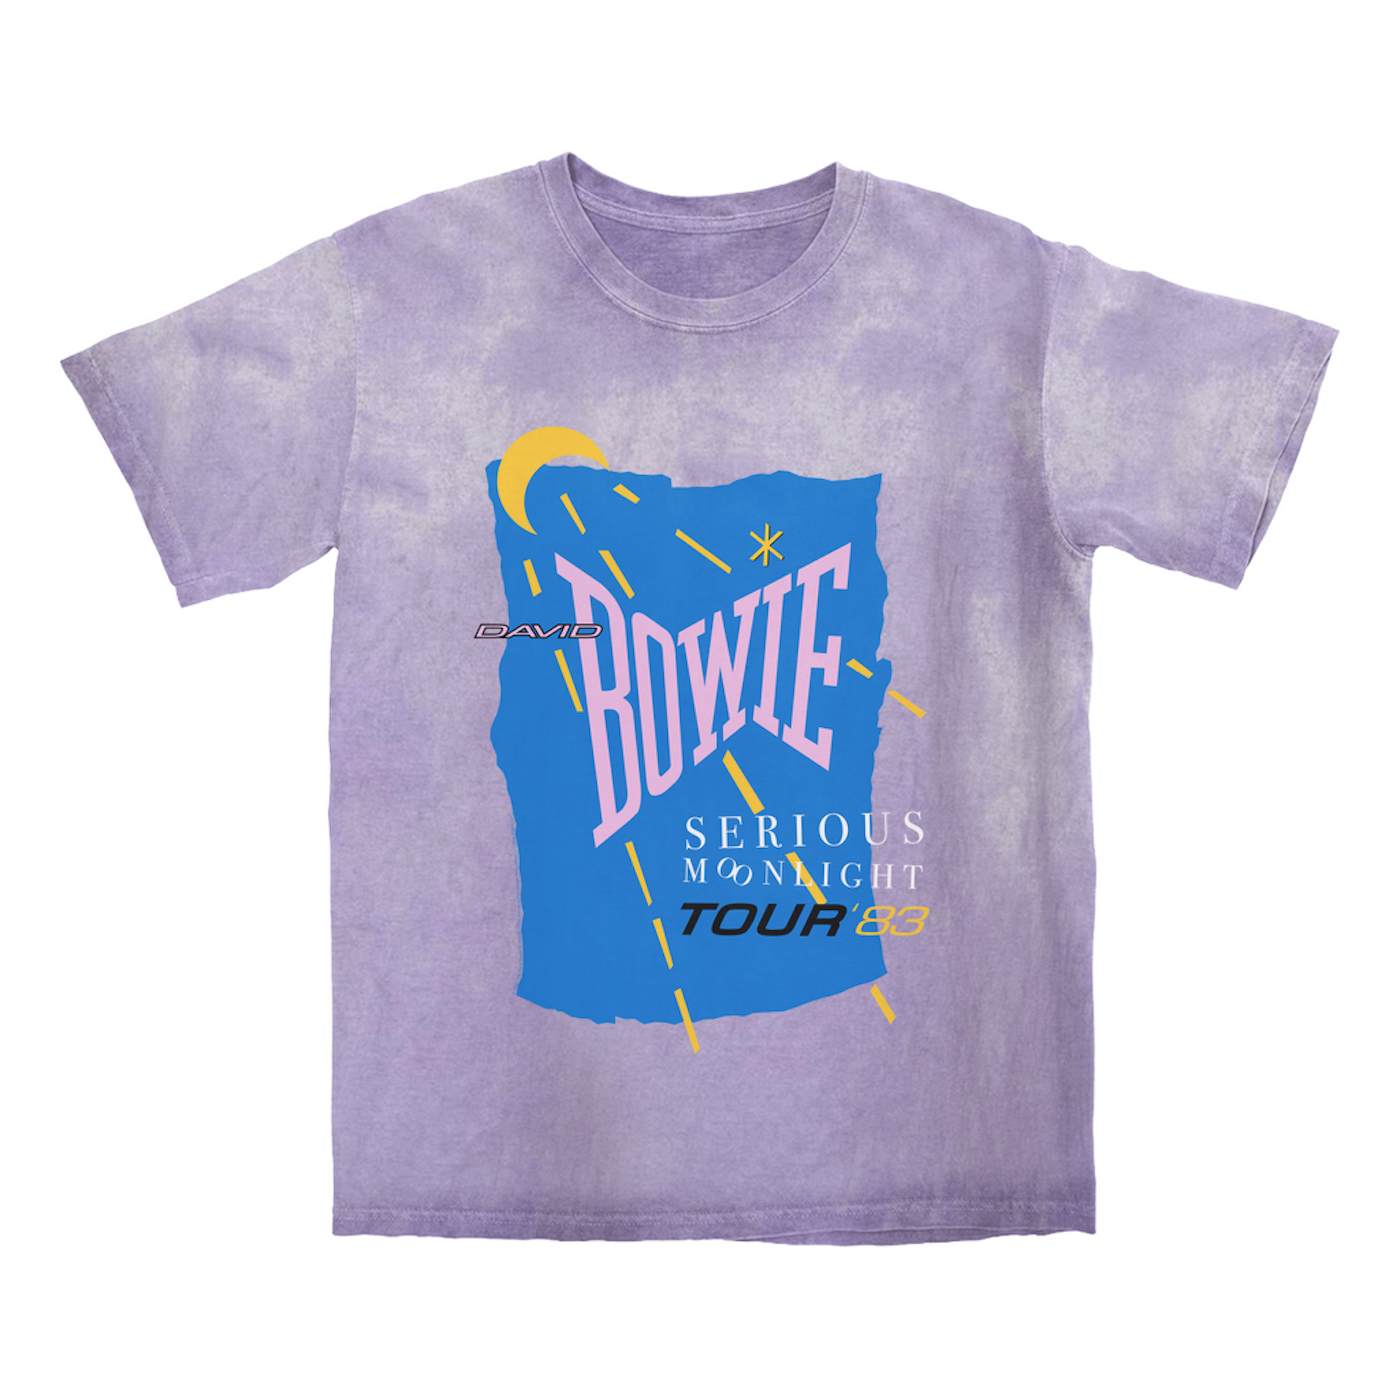 David Bowie T-shirt | Serious Moonlight 1983 Tour (Merchbar Exclusive) David Bowie Color Blast Shirt